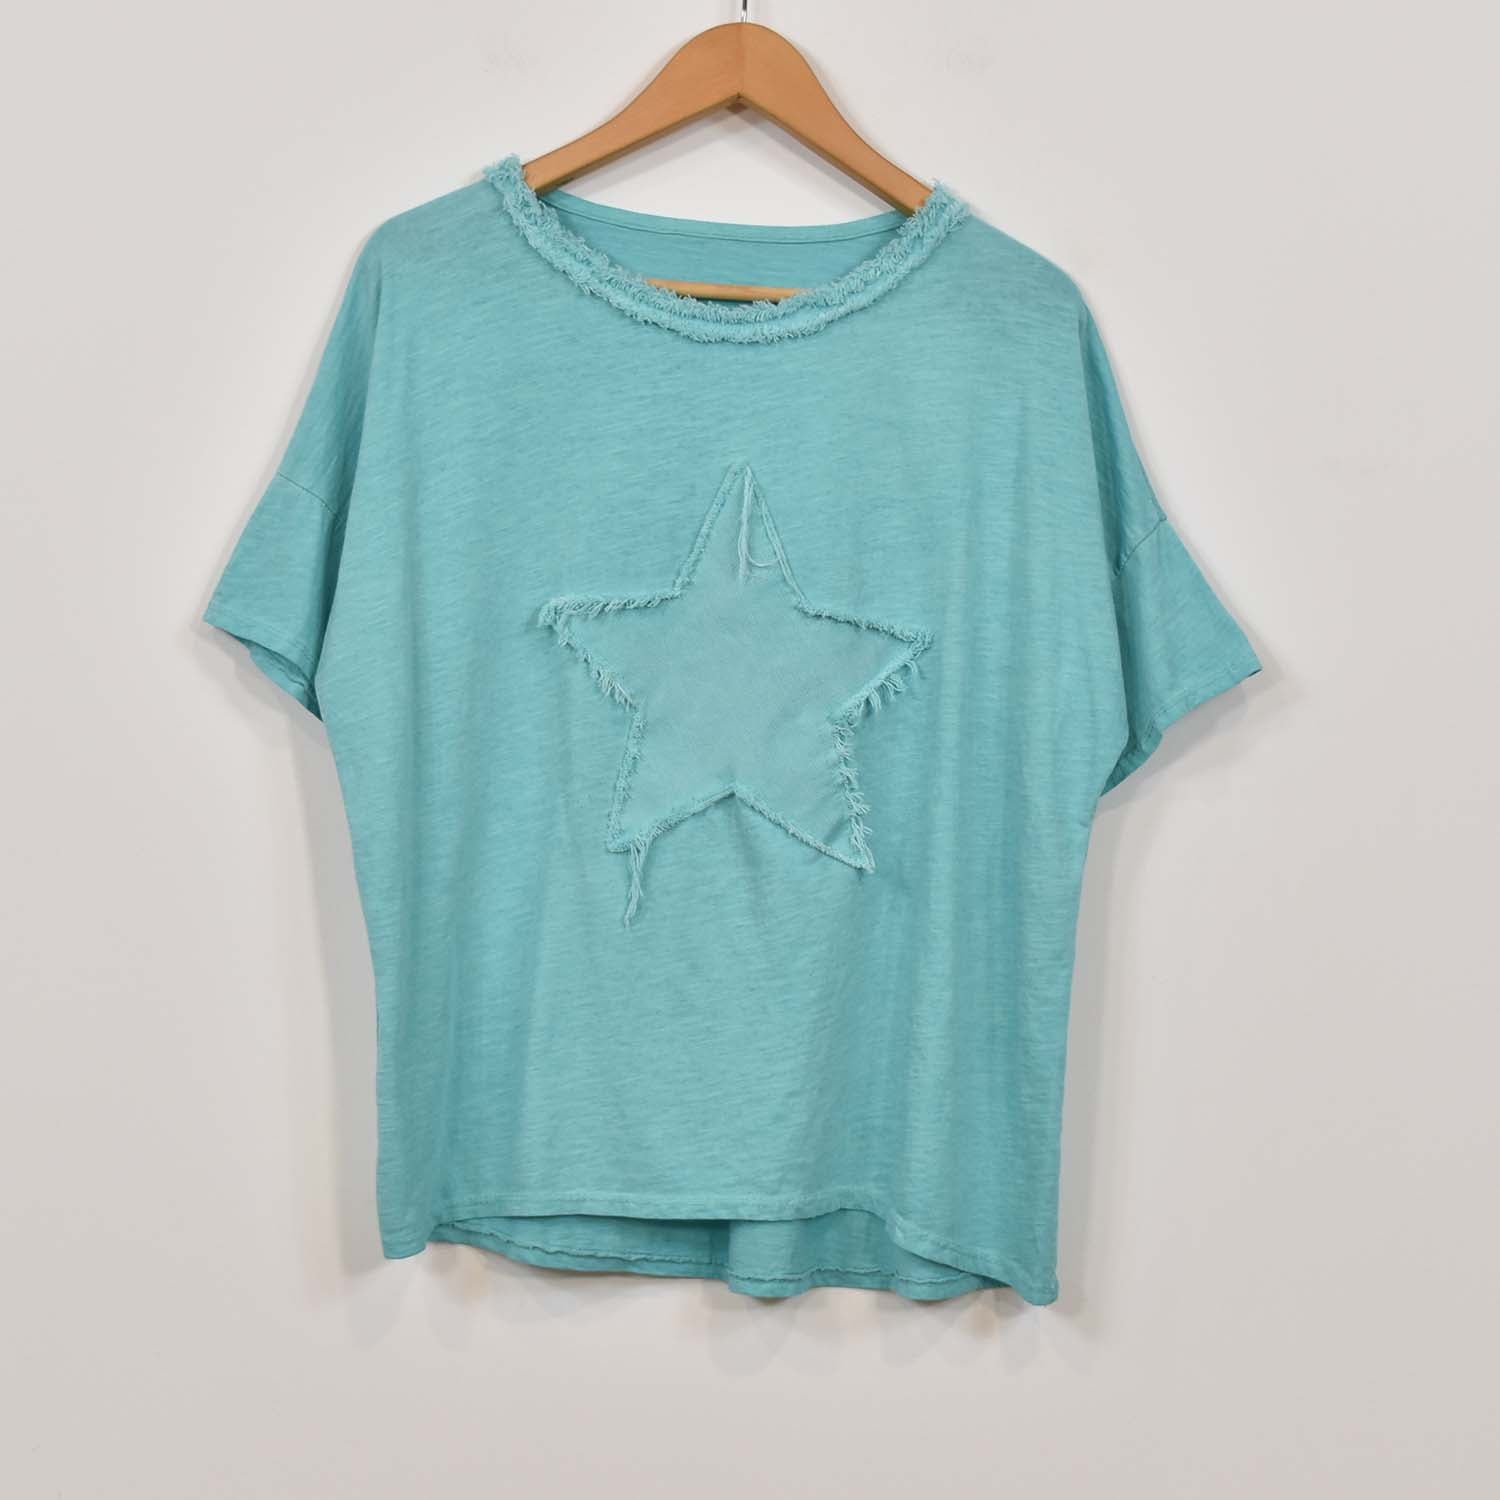 Turquoise fringed star t-shirt